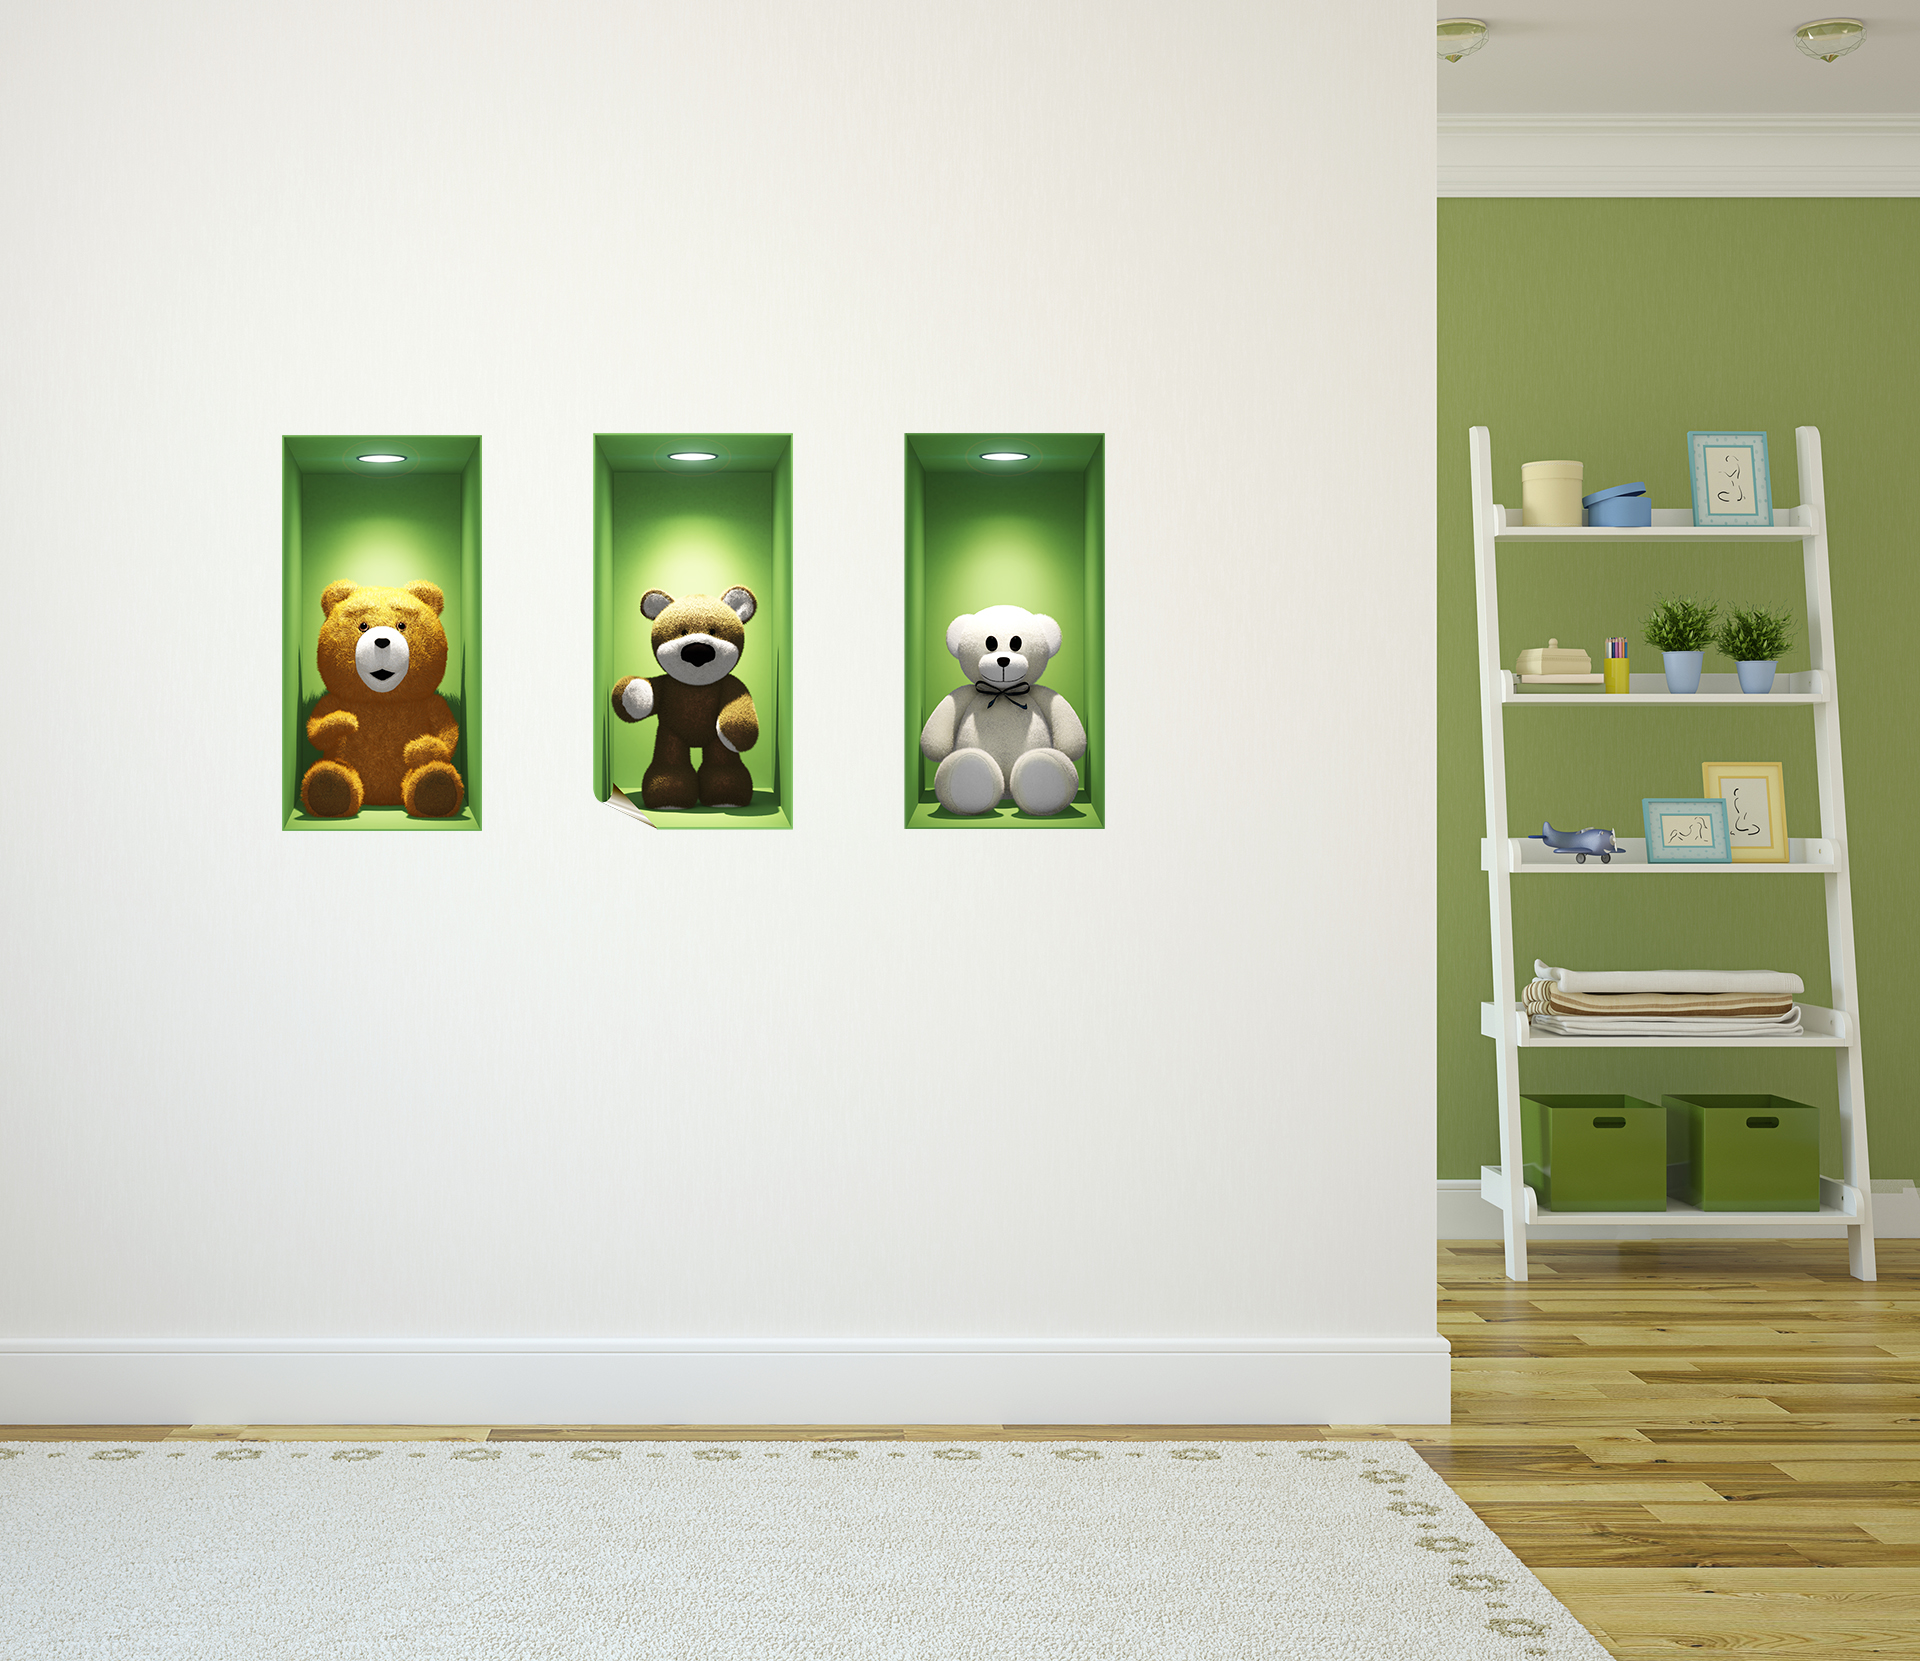 Wall decal 3D 3 bear cubs